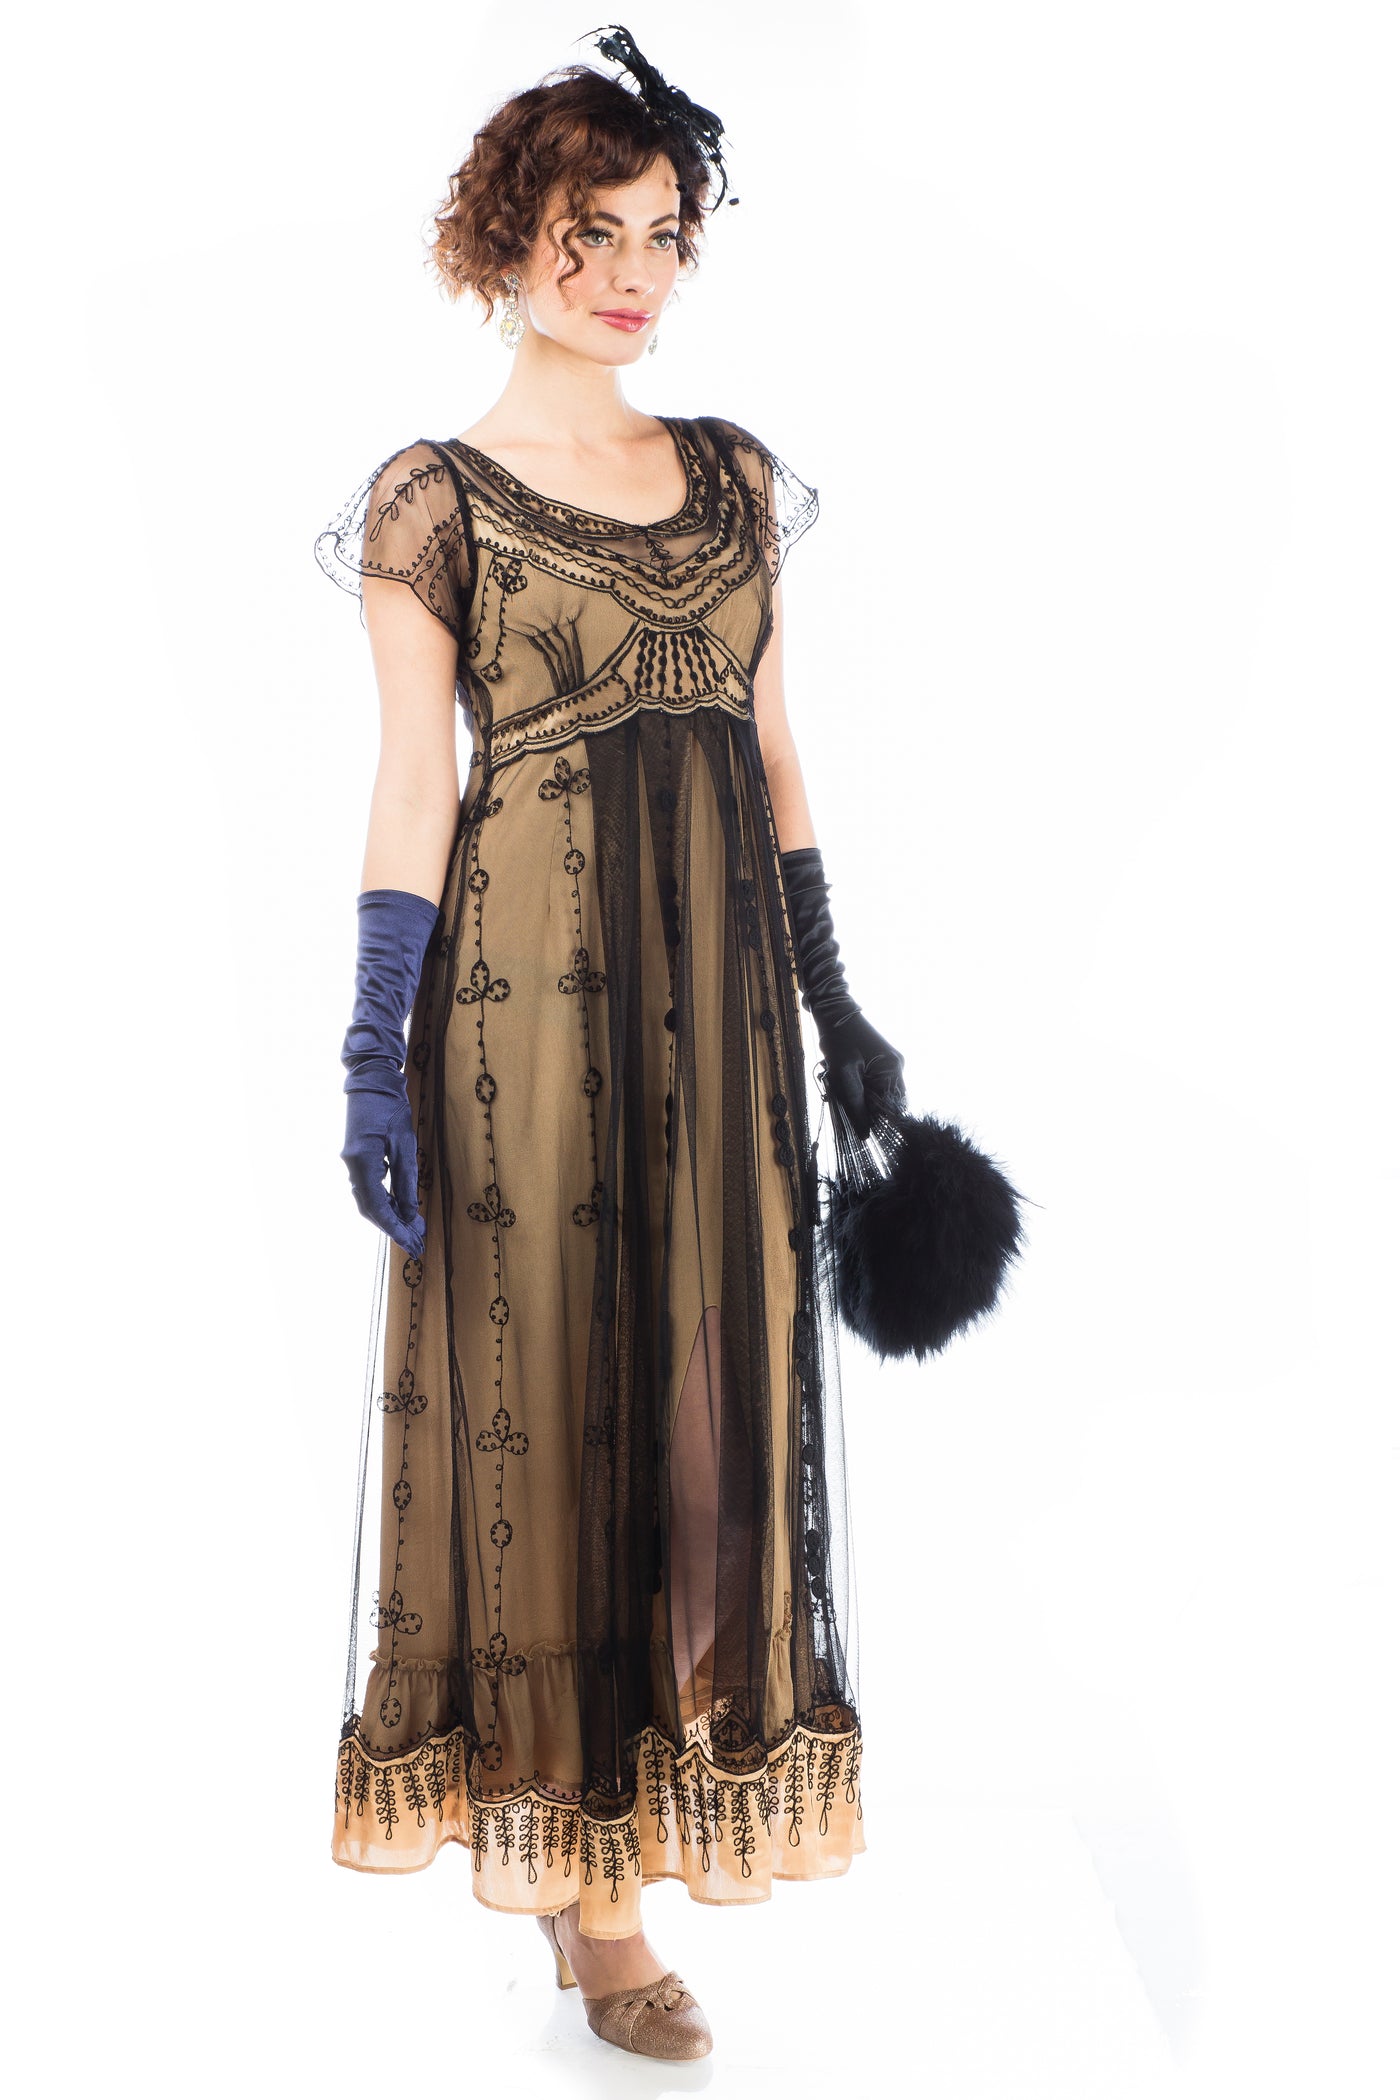     Izabella-Victorian-Style-Dress-in-Black-Gold-by-Nataya-side